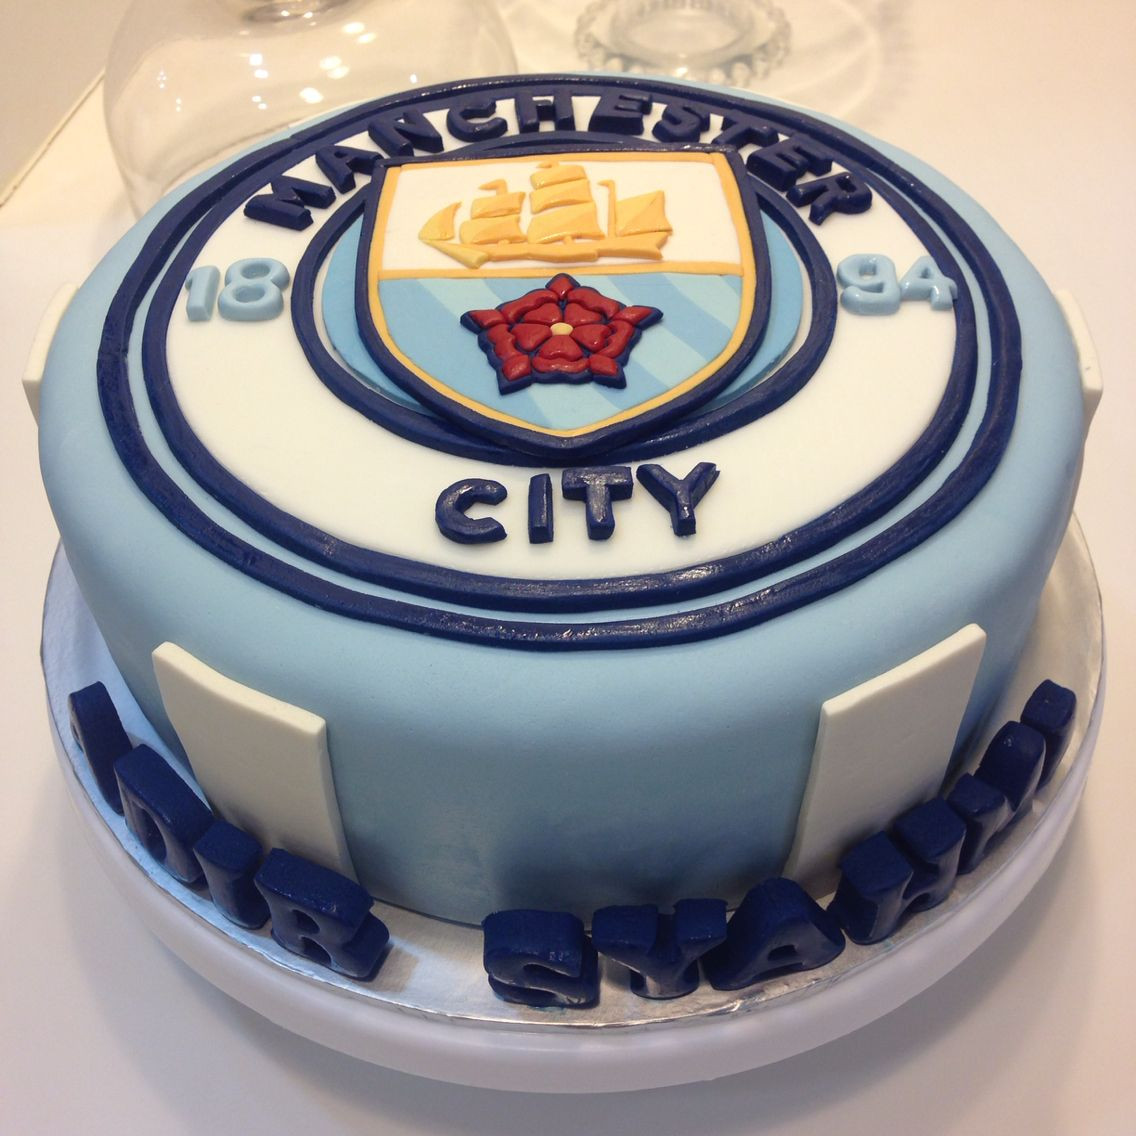 Food City Birthday Cakes
 Manchester City Cake Soccer theme cake